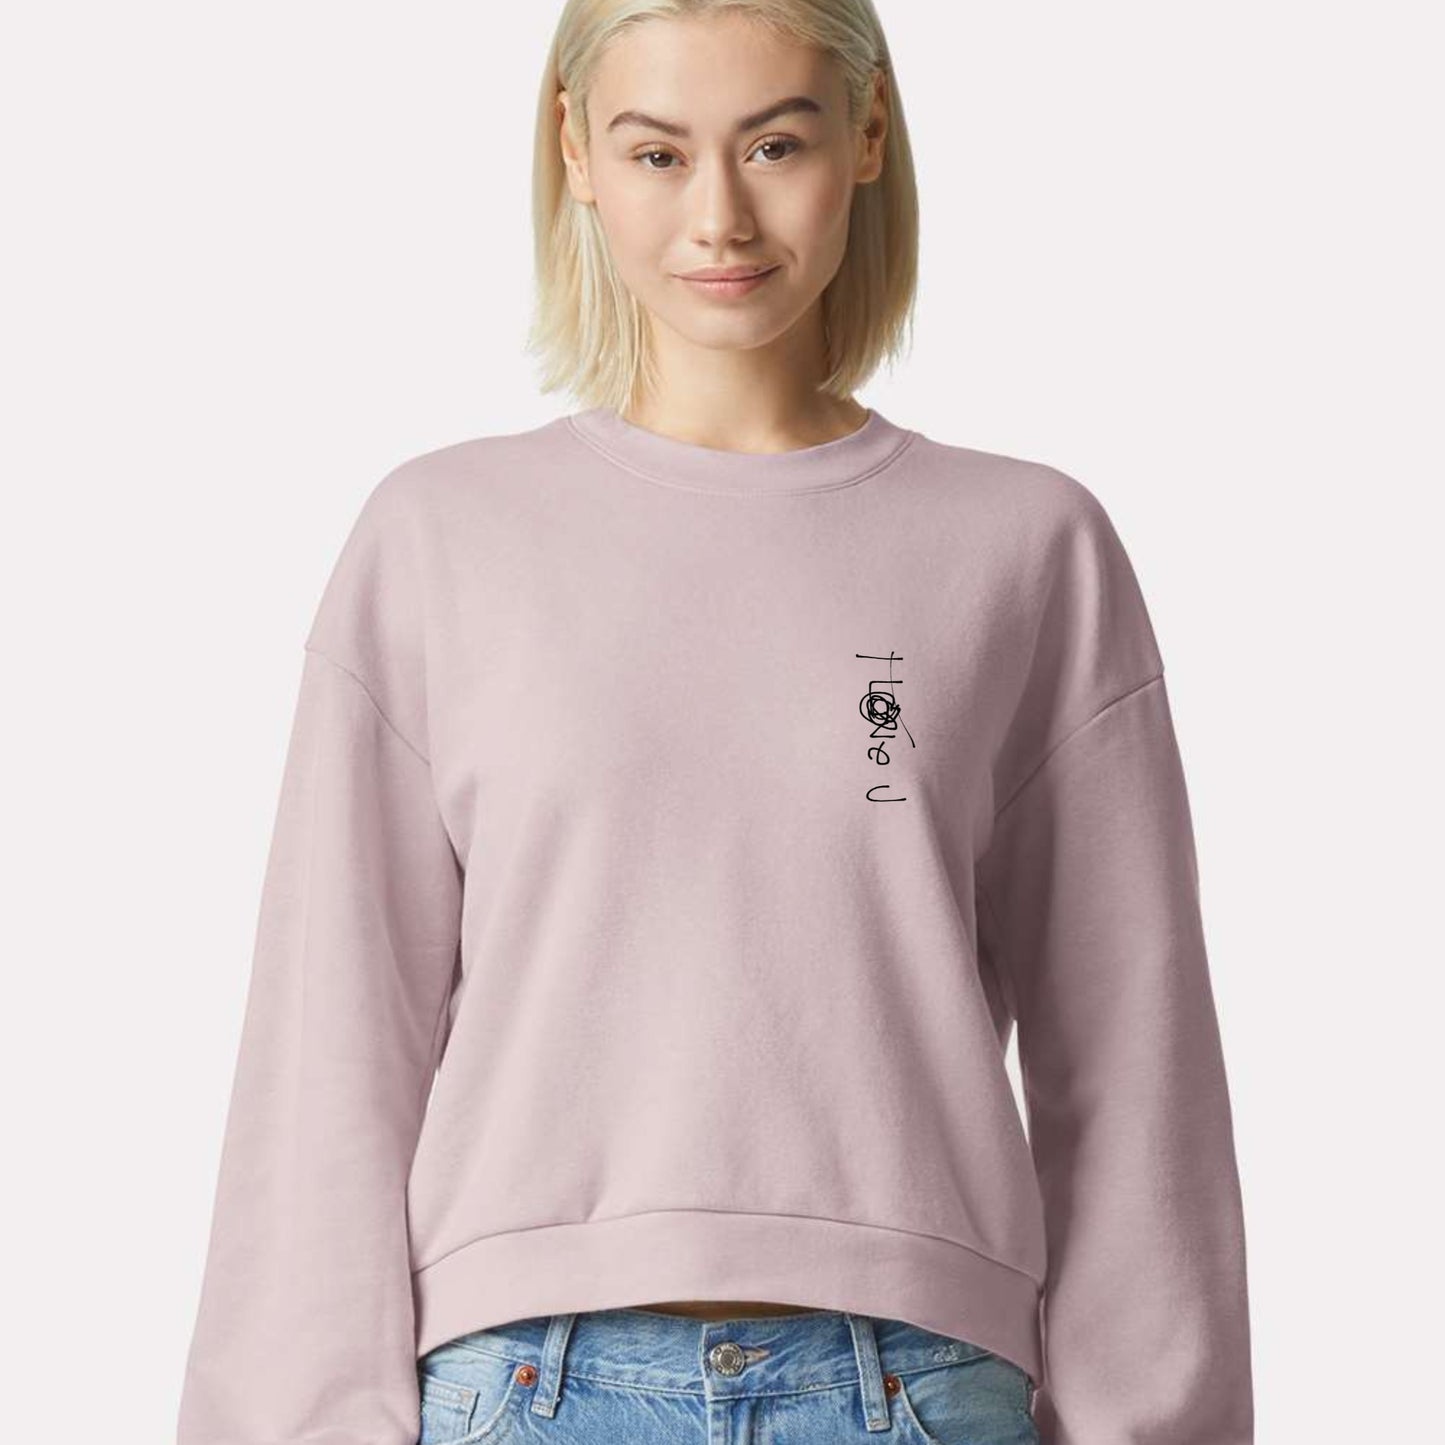 Womens 'I Love U' fleece crewneck sweater - Pink